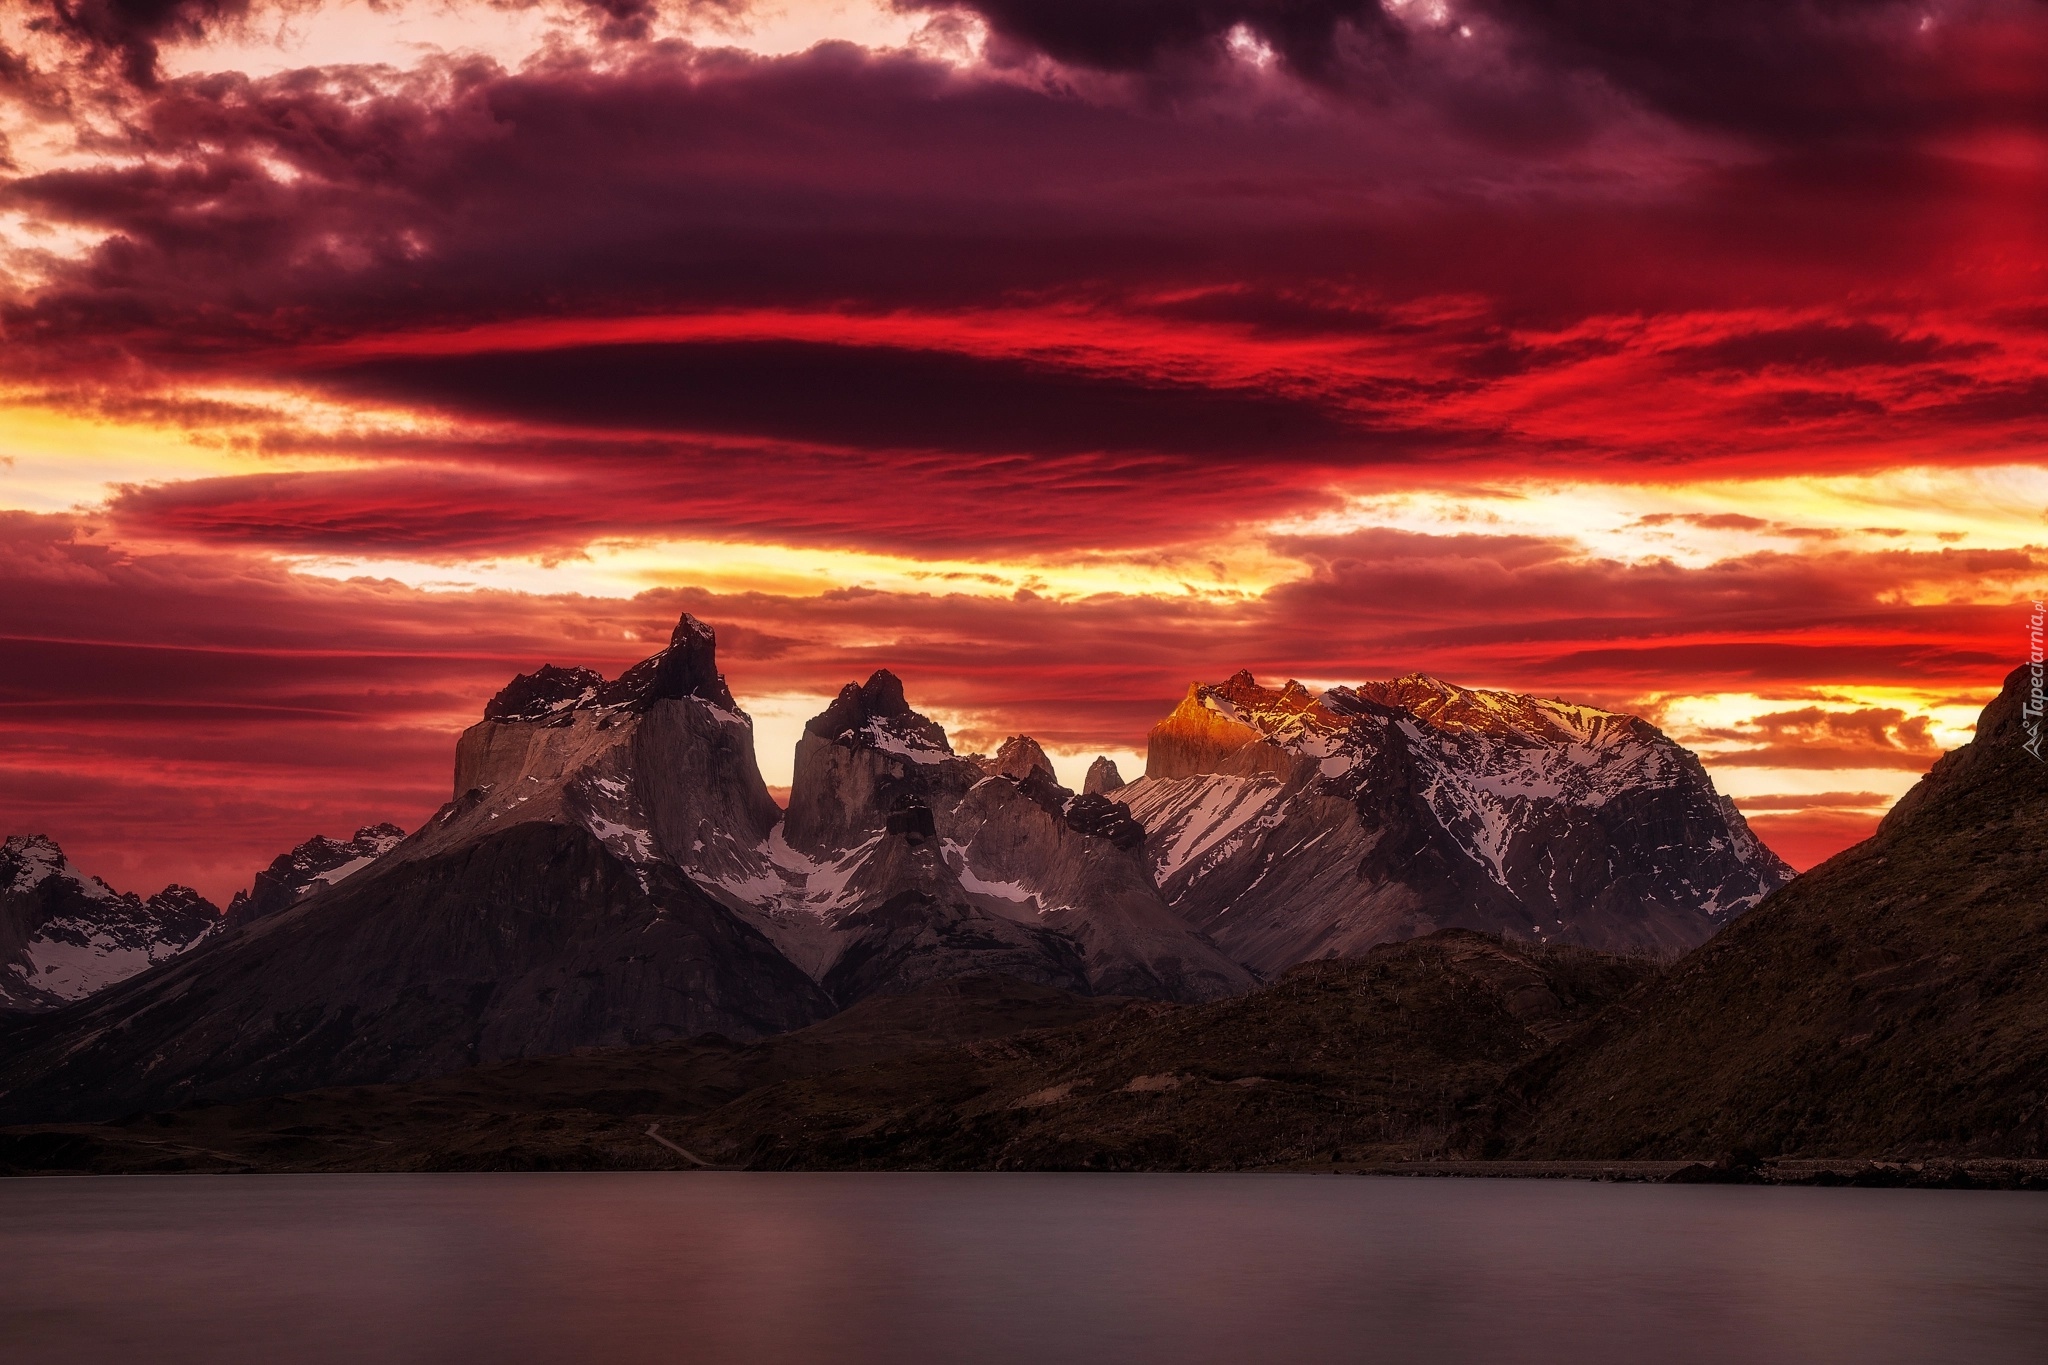 Chile, Patagonia, Park Narodowy Torres del Paine, Cordillera del Paine, Jezioro Lake Pehoé, Zachód Słońca, Góry, Jezioro, Chmury, Zachód słońca